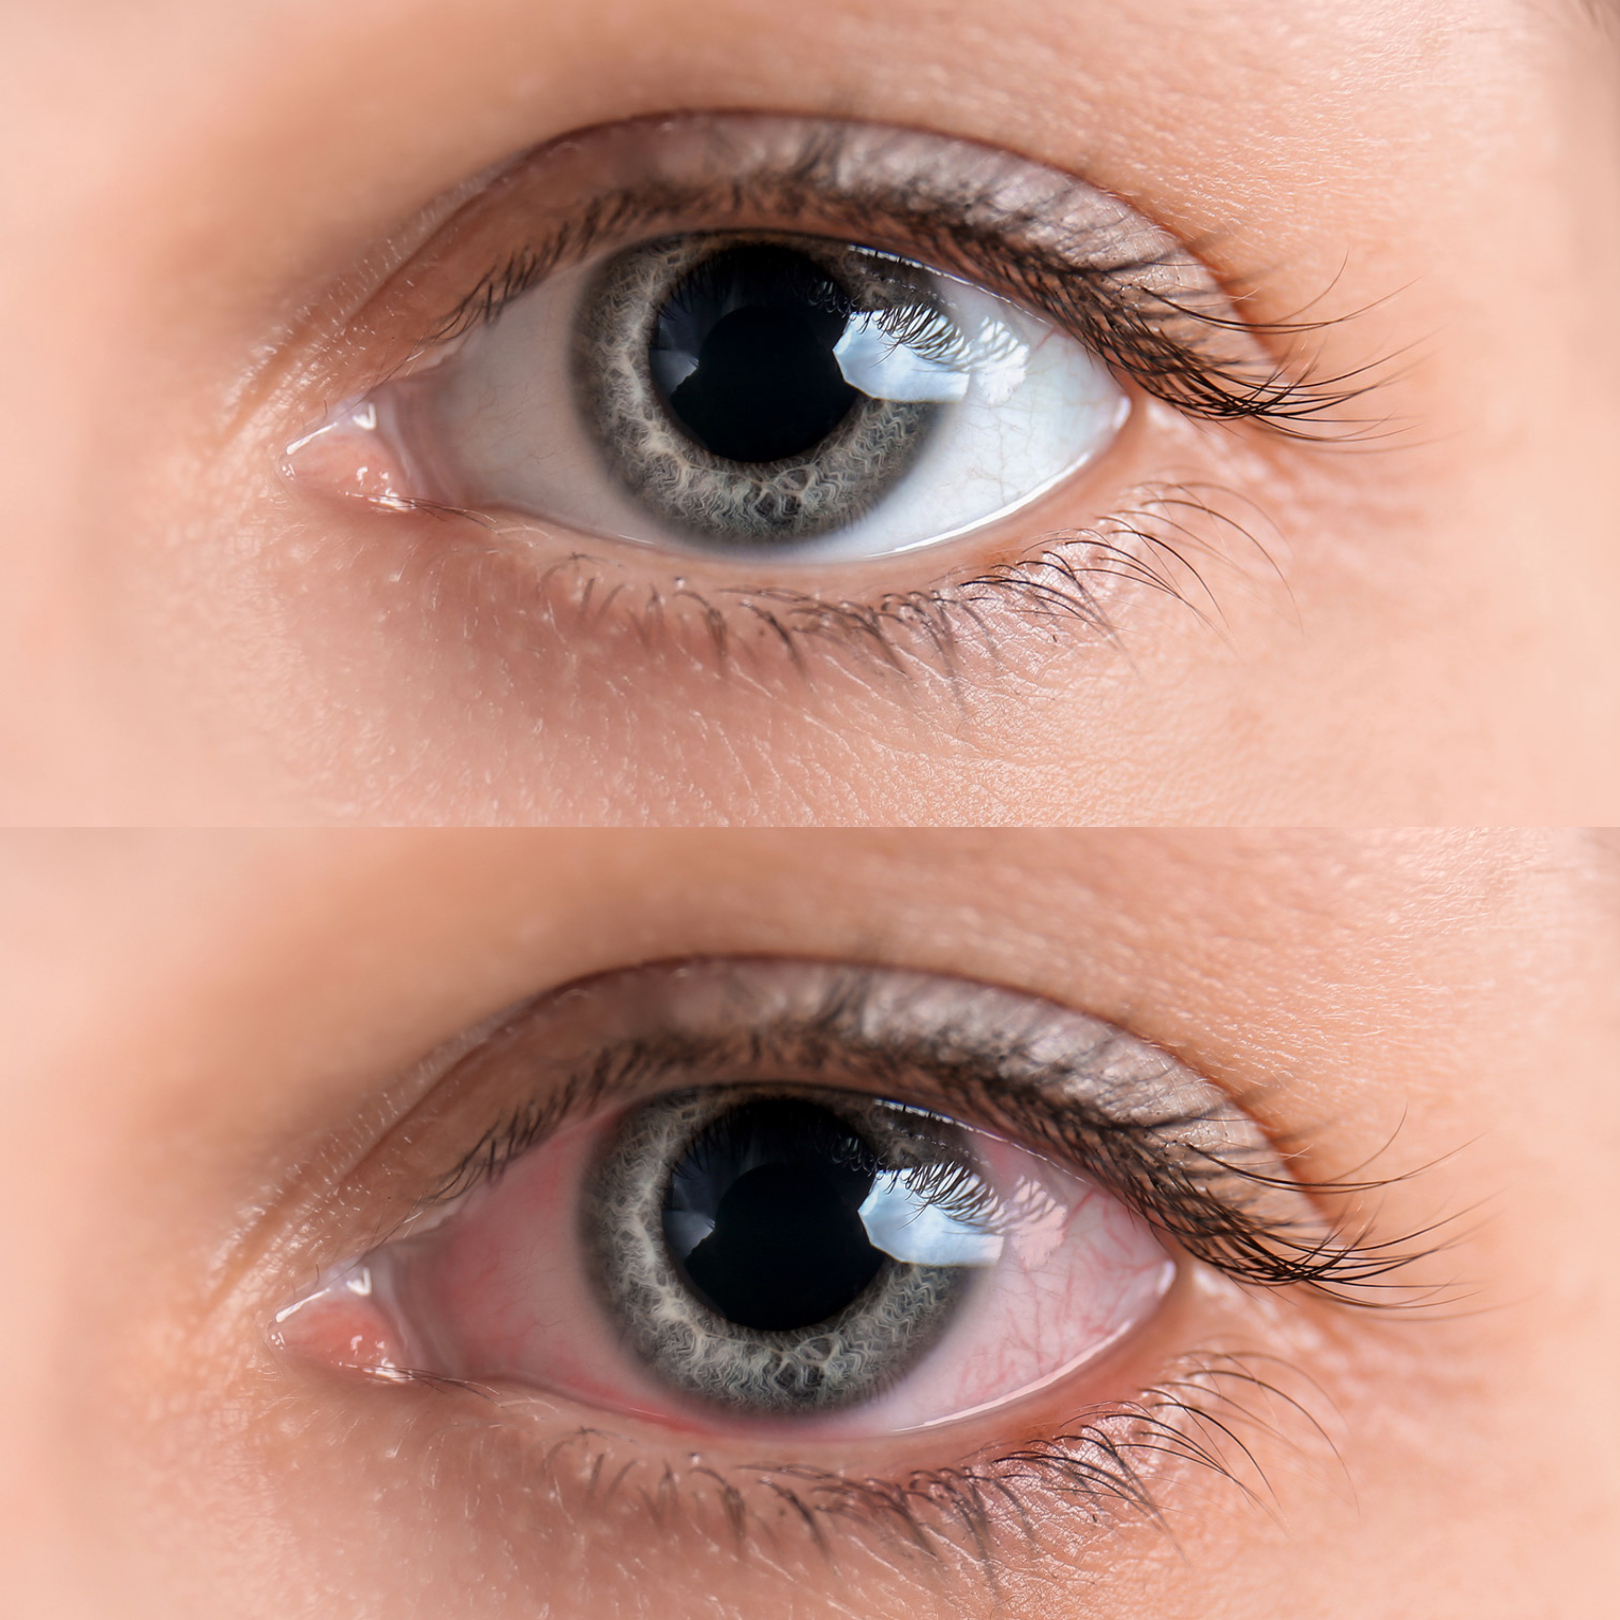 Common Eye Disorders and Diseases